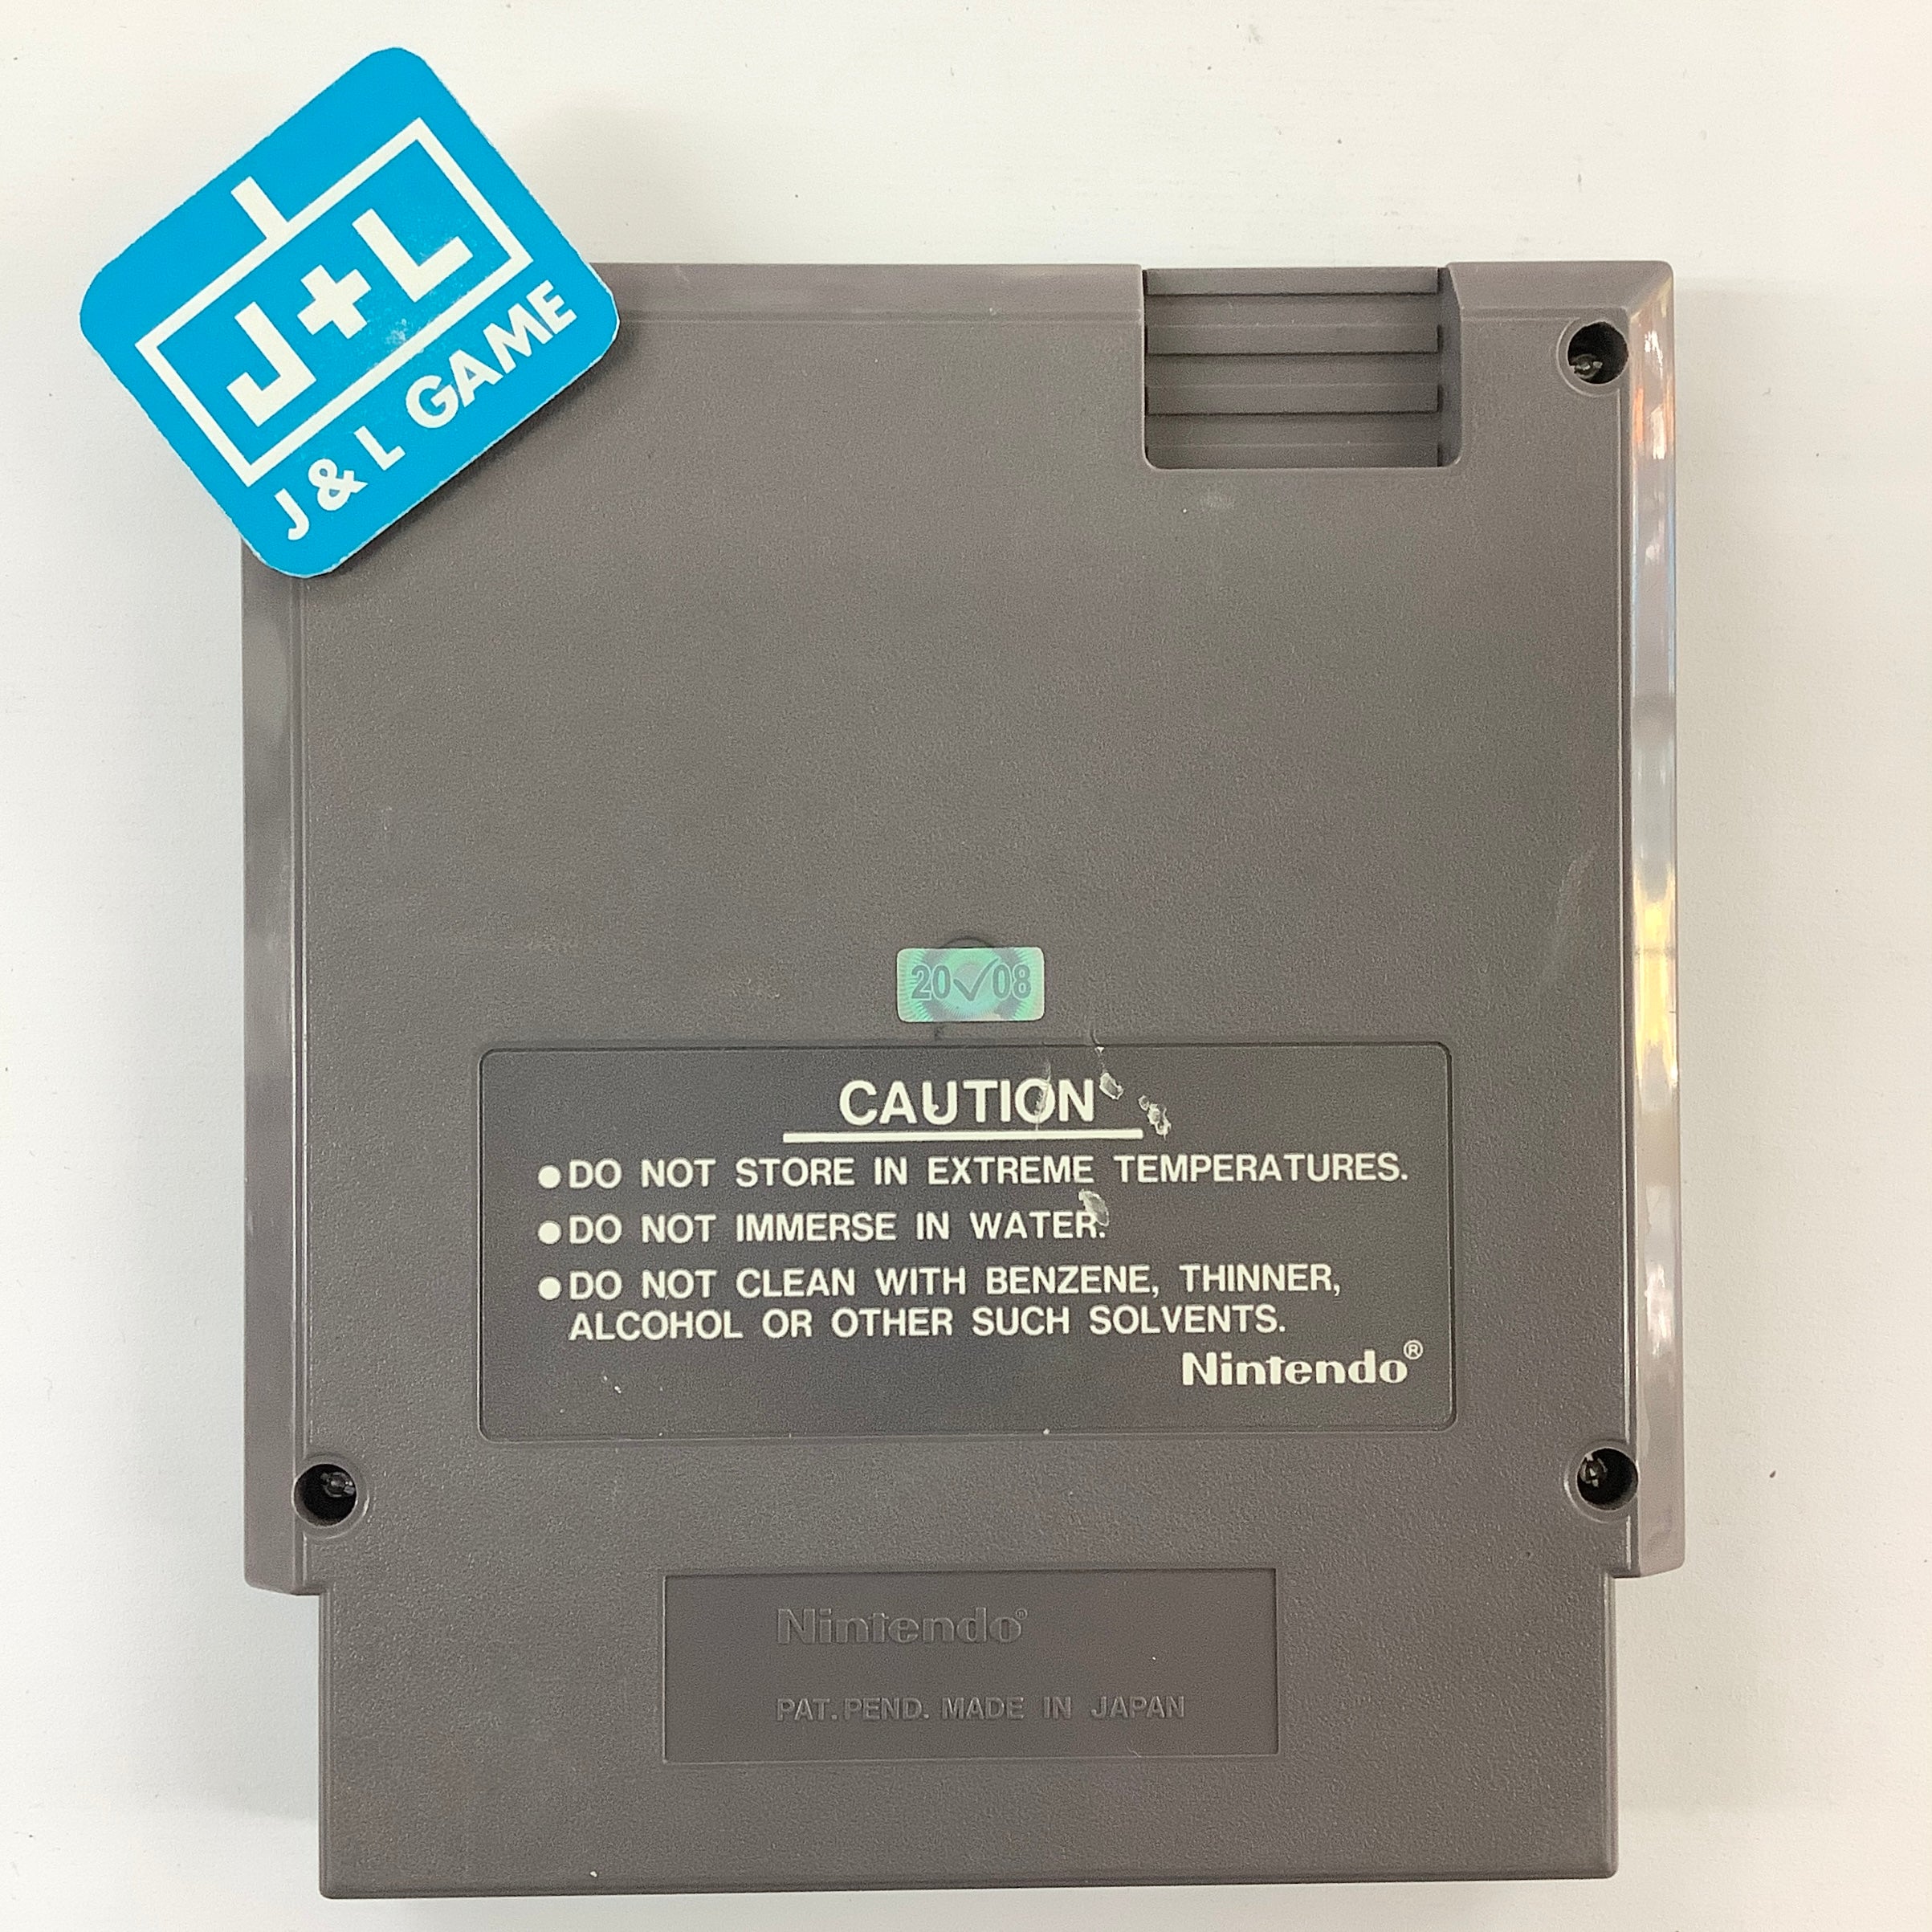 Clu Clu Land - (NES) Nintendo Entertainment System [Pre-Owned] Video Games Nintendo   